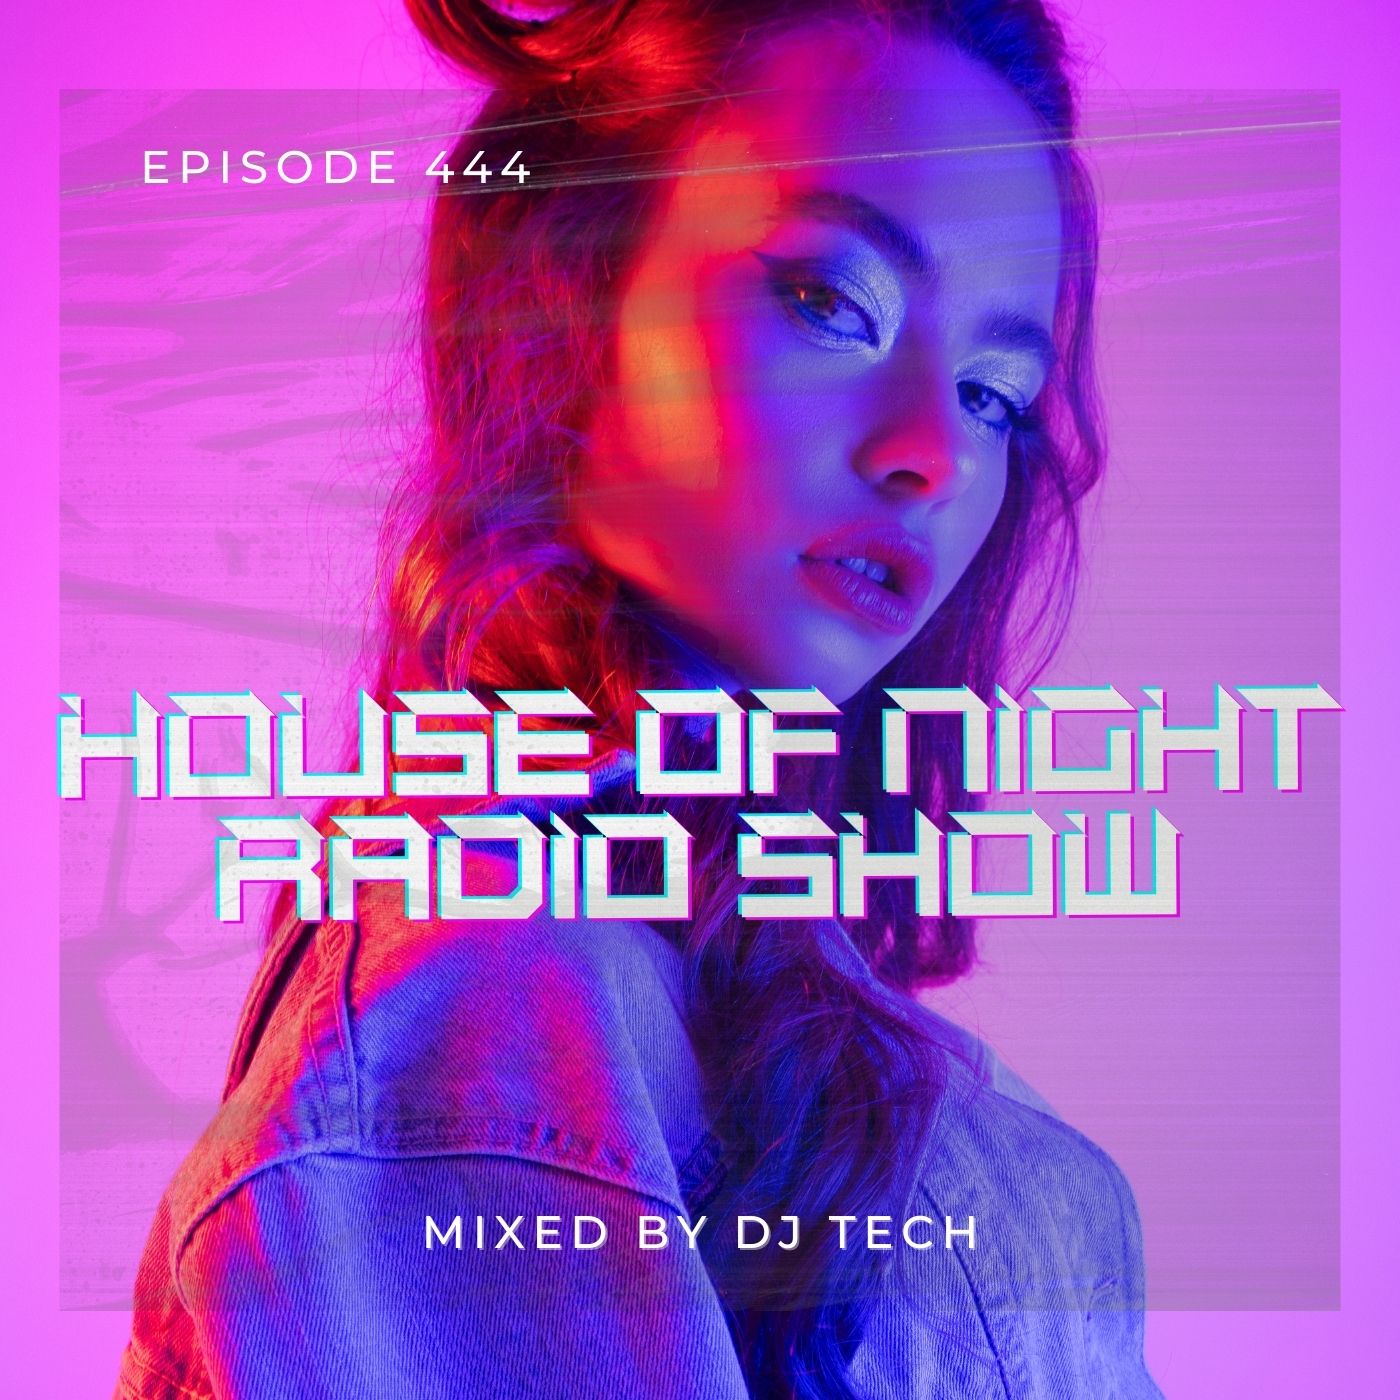 HOUSE OF NIGHT RADIO SHOW EP 444 MIXADO POR DJ TECH